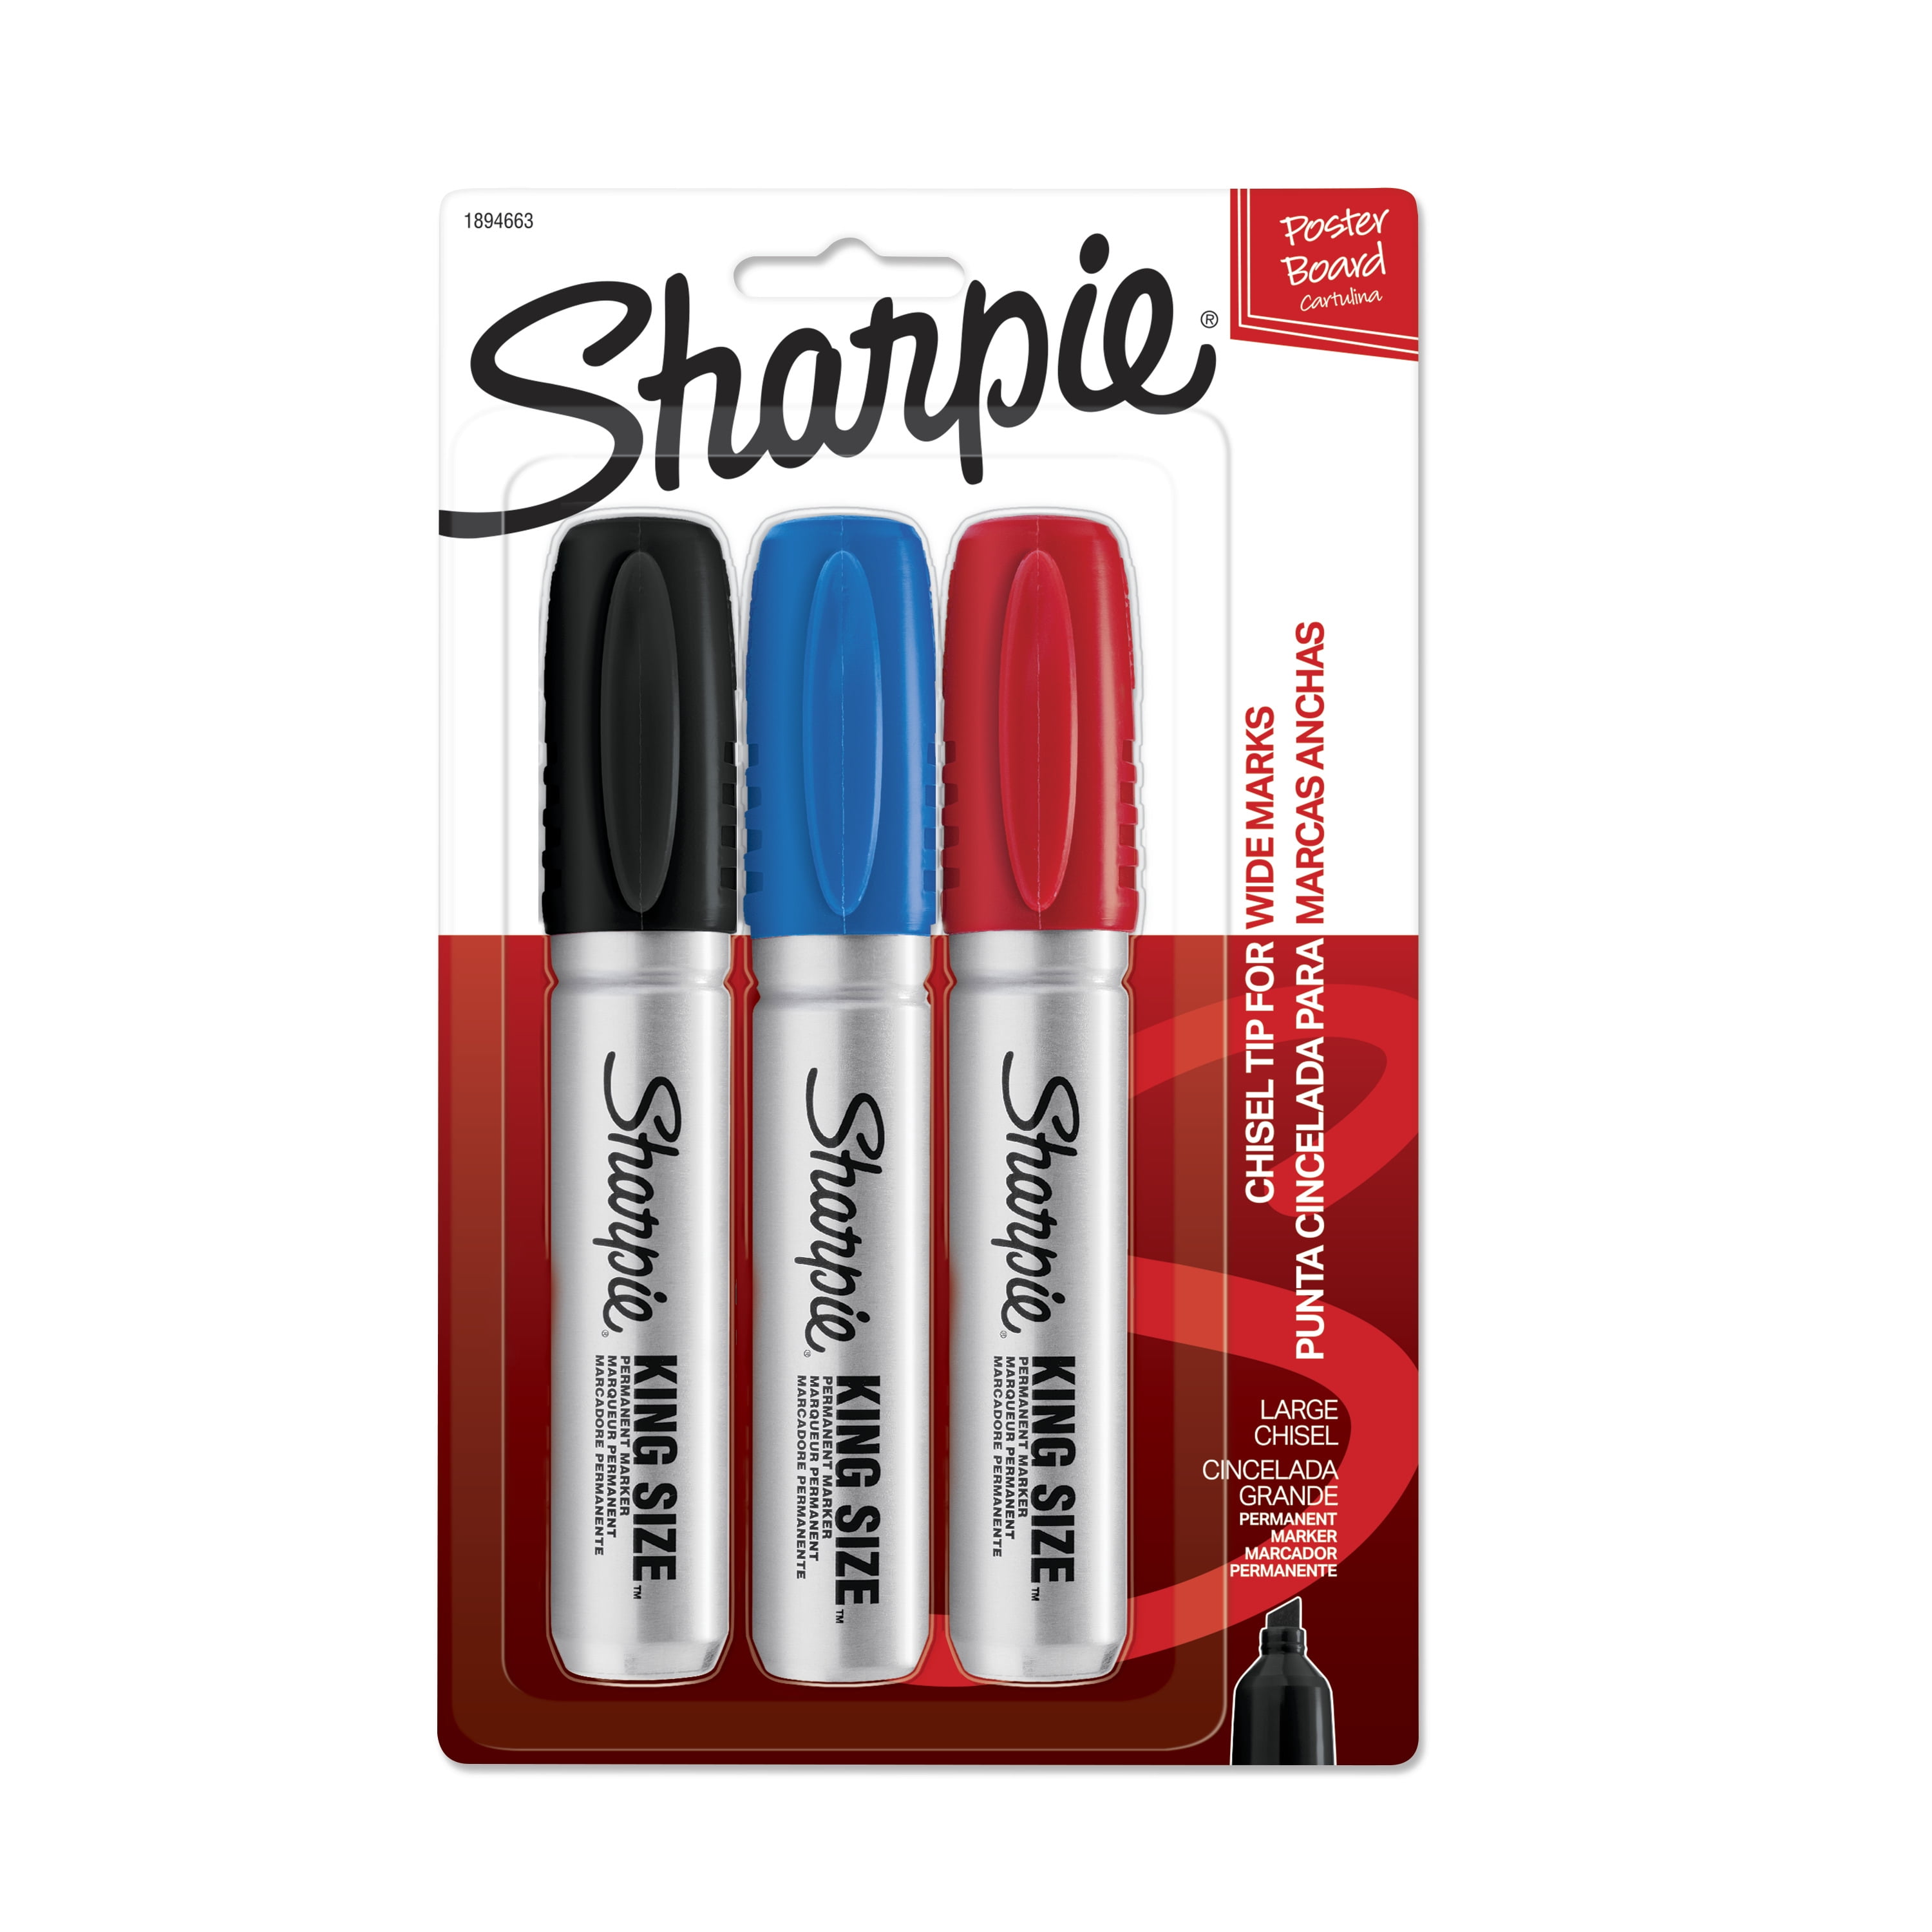 Sharpie King Size Permanent Marker | Large Chisel Tip ...